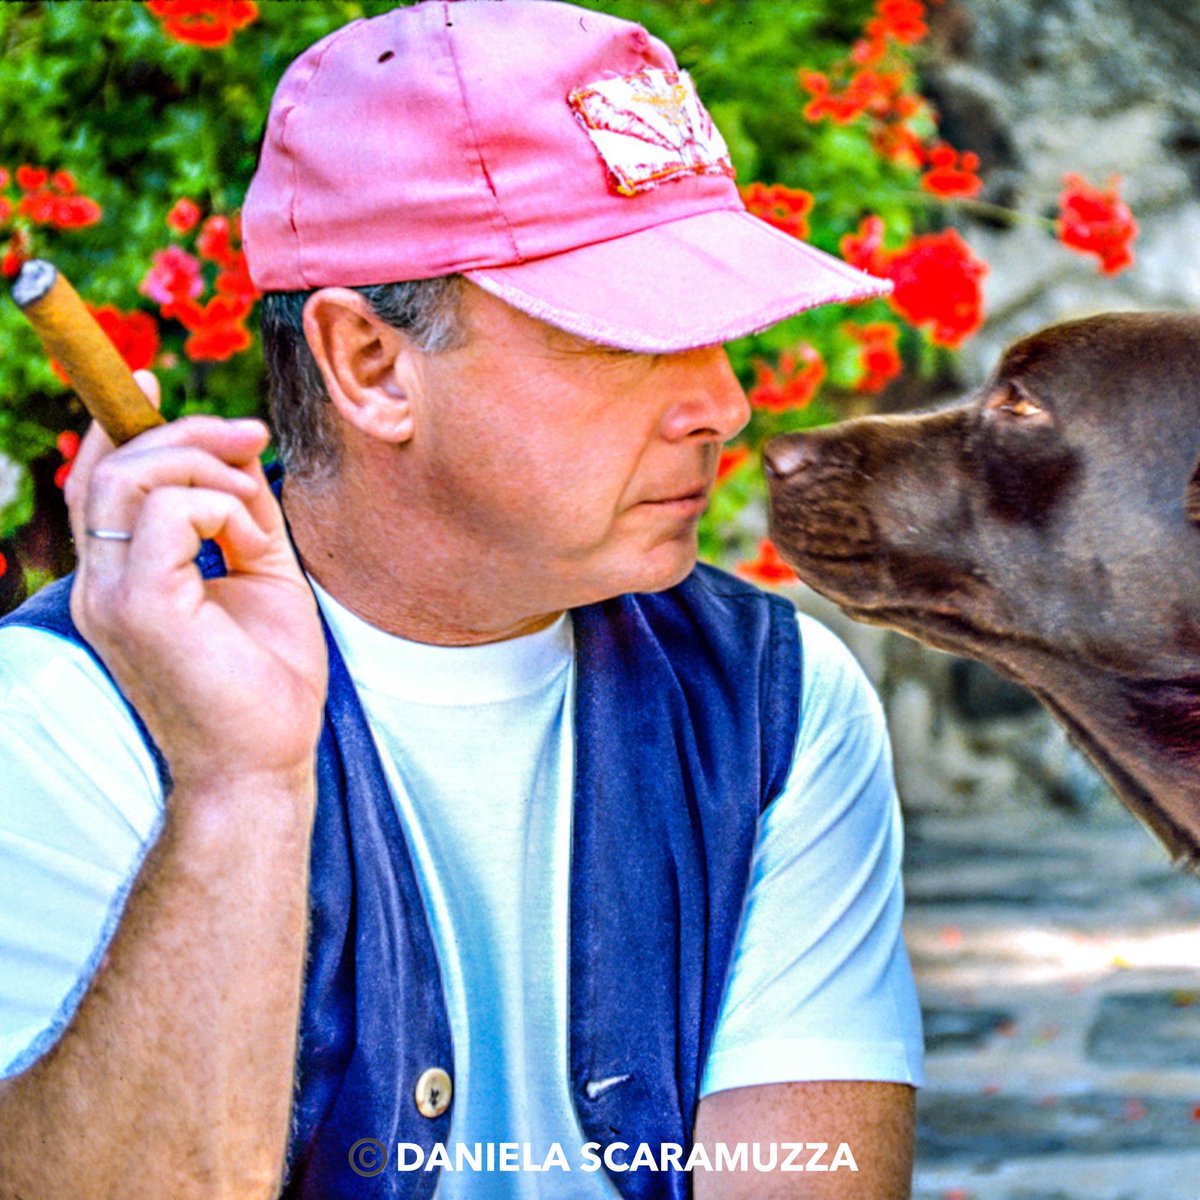 Tony Scott, not only a creative visionary director but a true #doglover, estimator of #Italian cuisine, design and wine! In loving memory ❤️ Photography danielascaramuzza.com